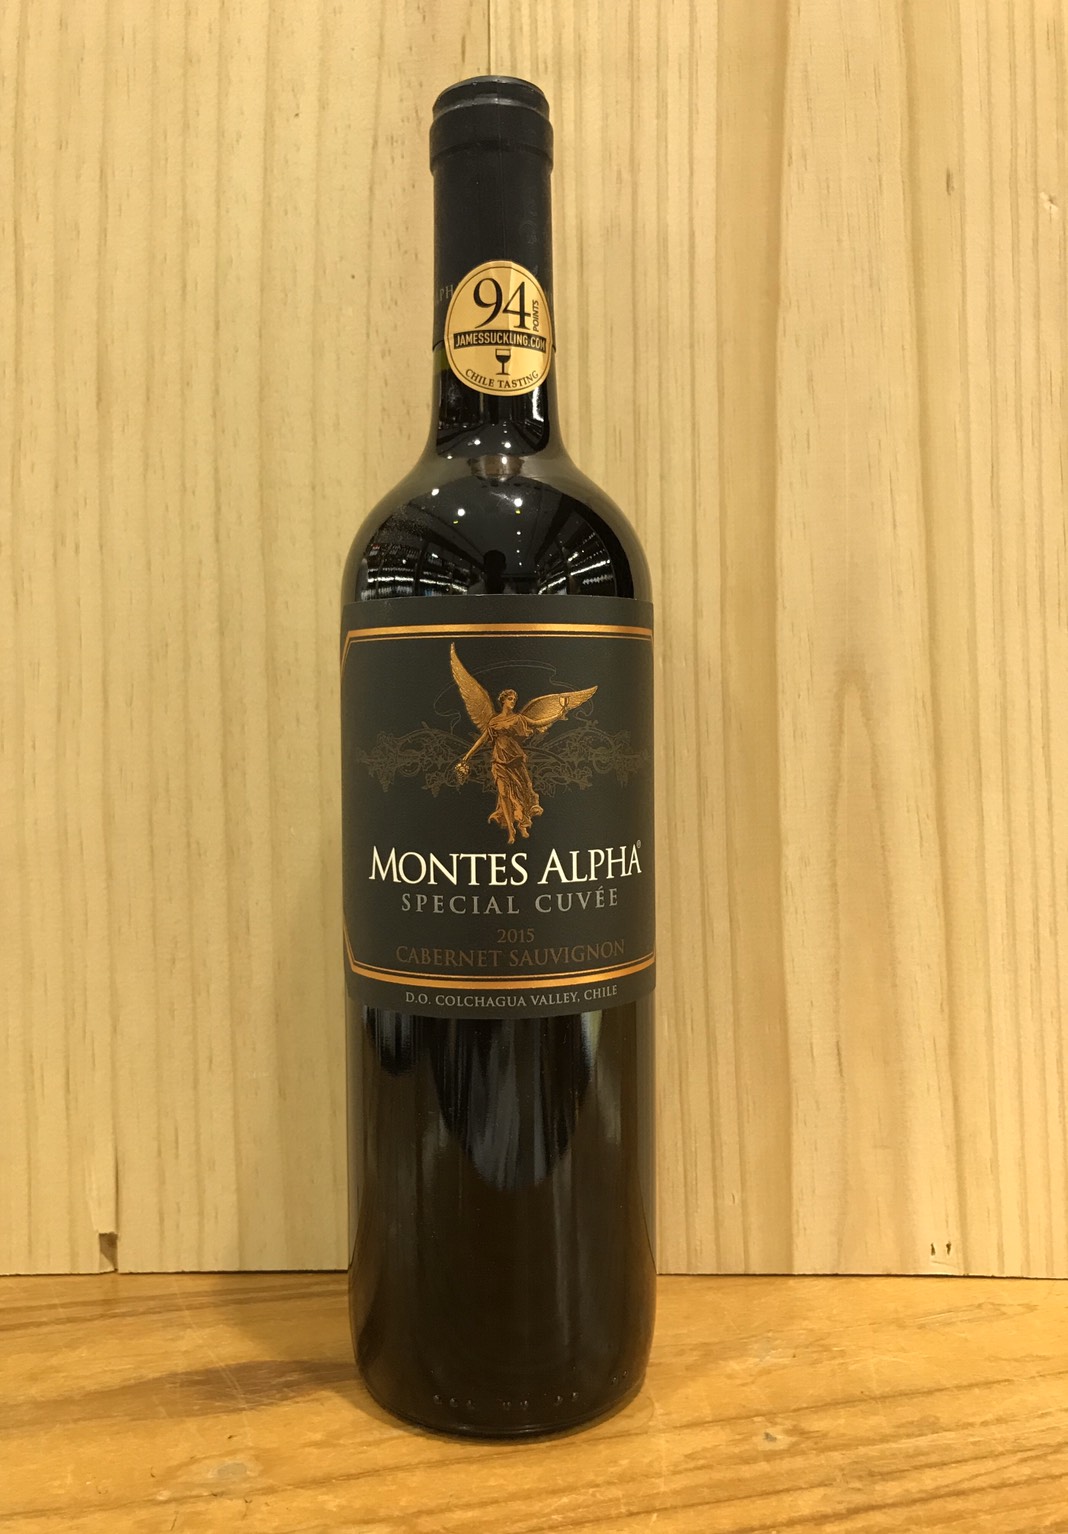 Montes Alpha special cuvee cabernet sauvignon